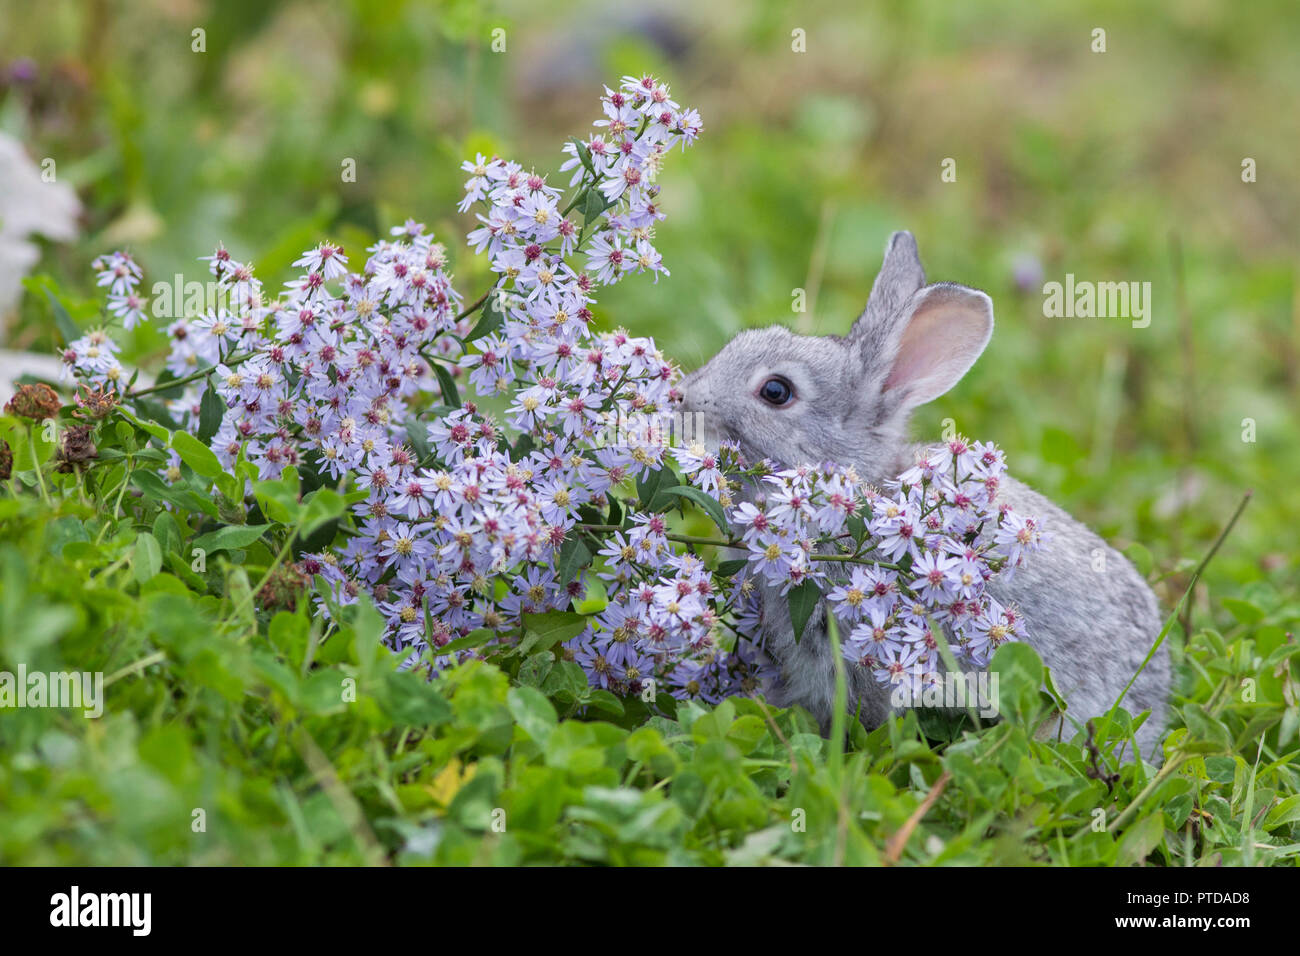 Cute Baby rabbit in purple flowers Stock Photo